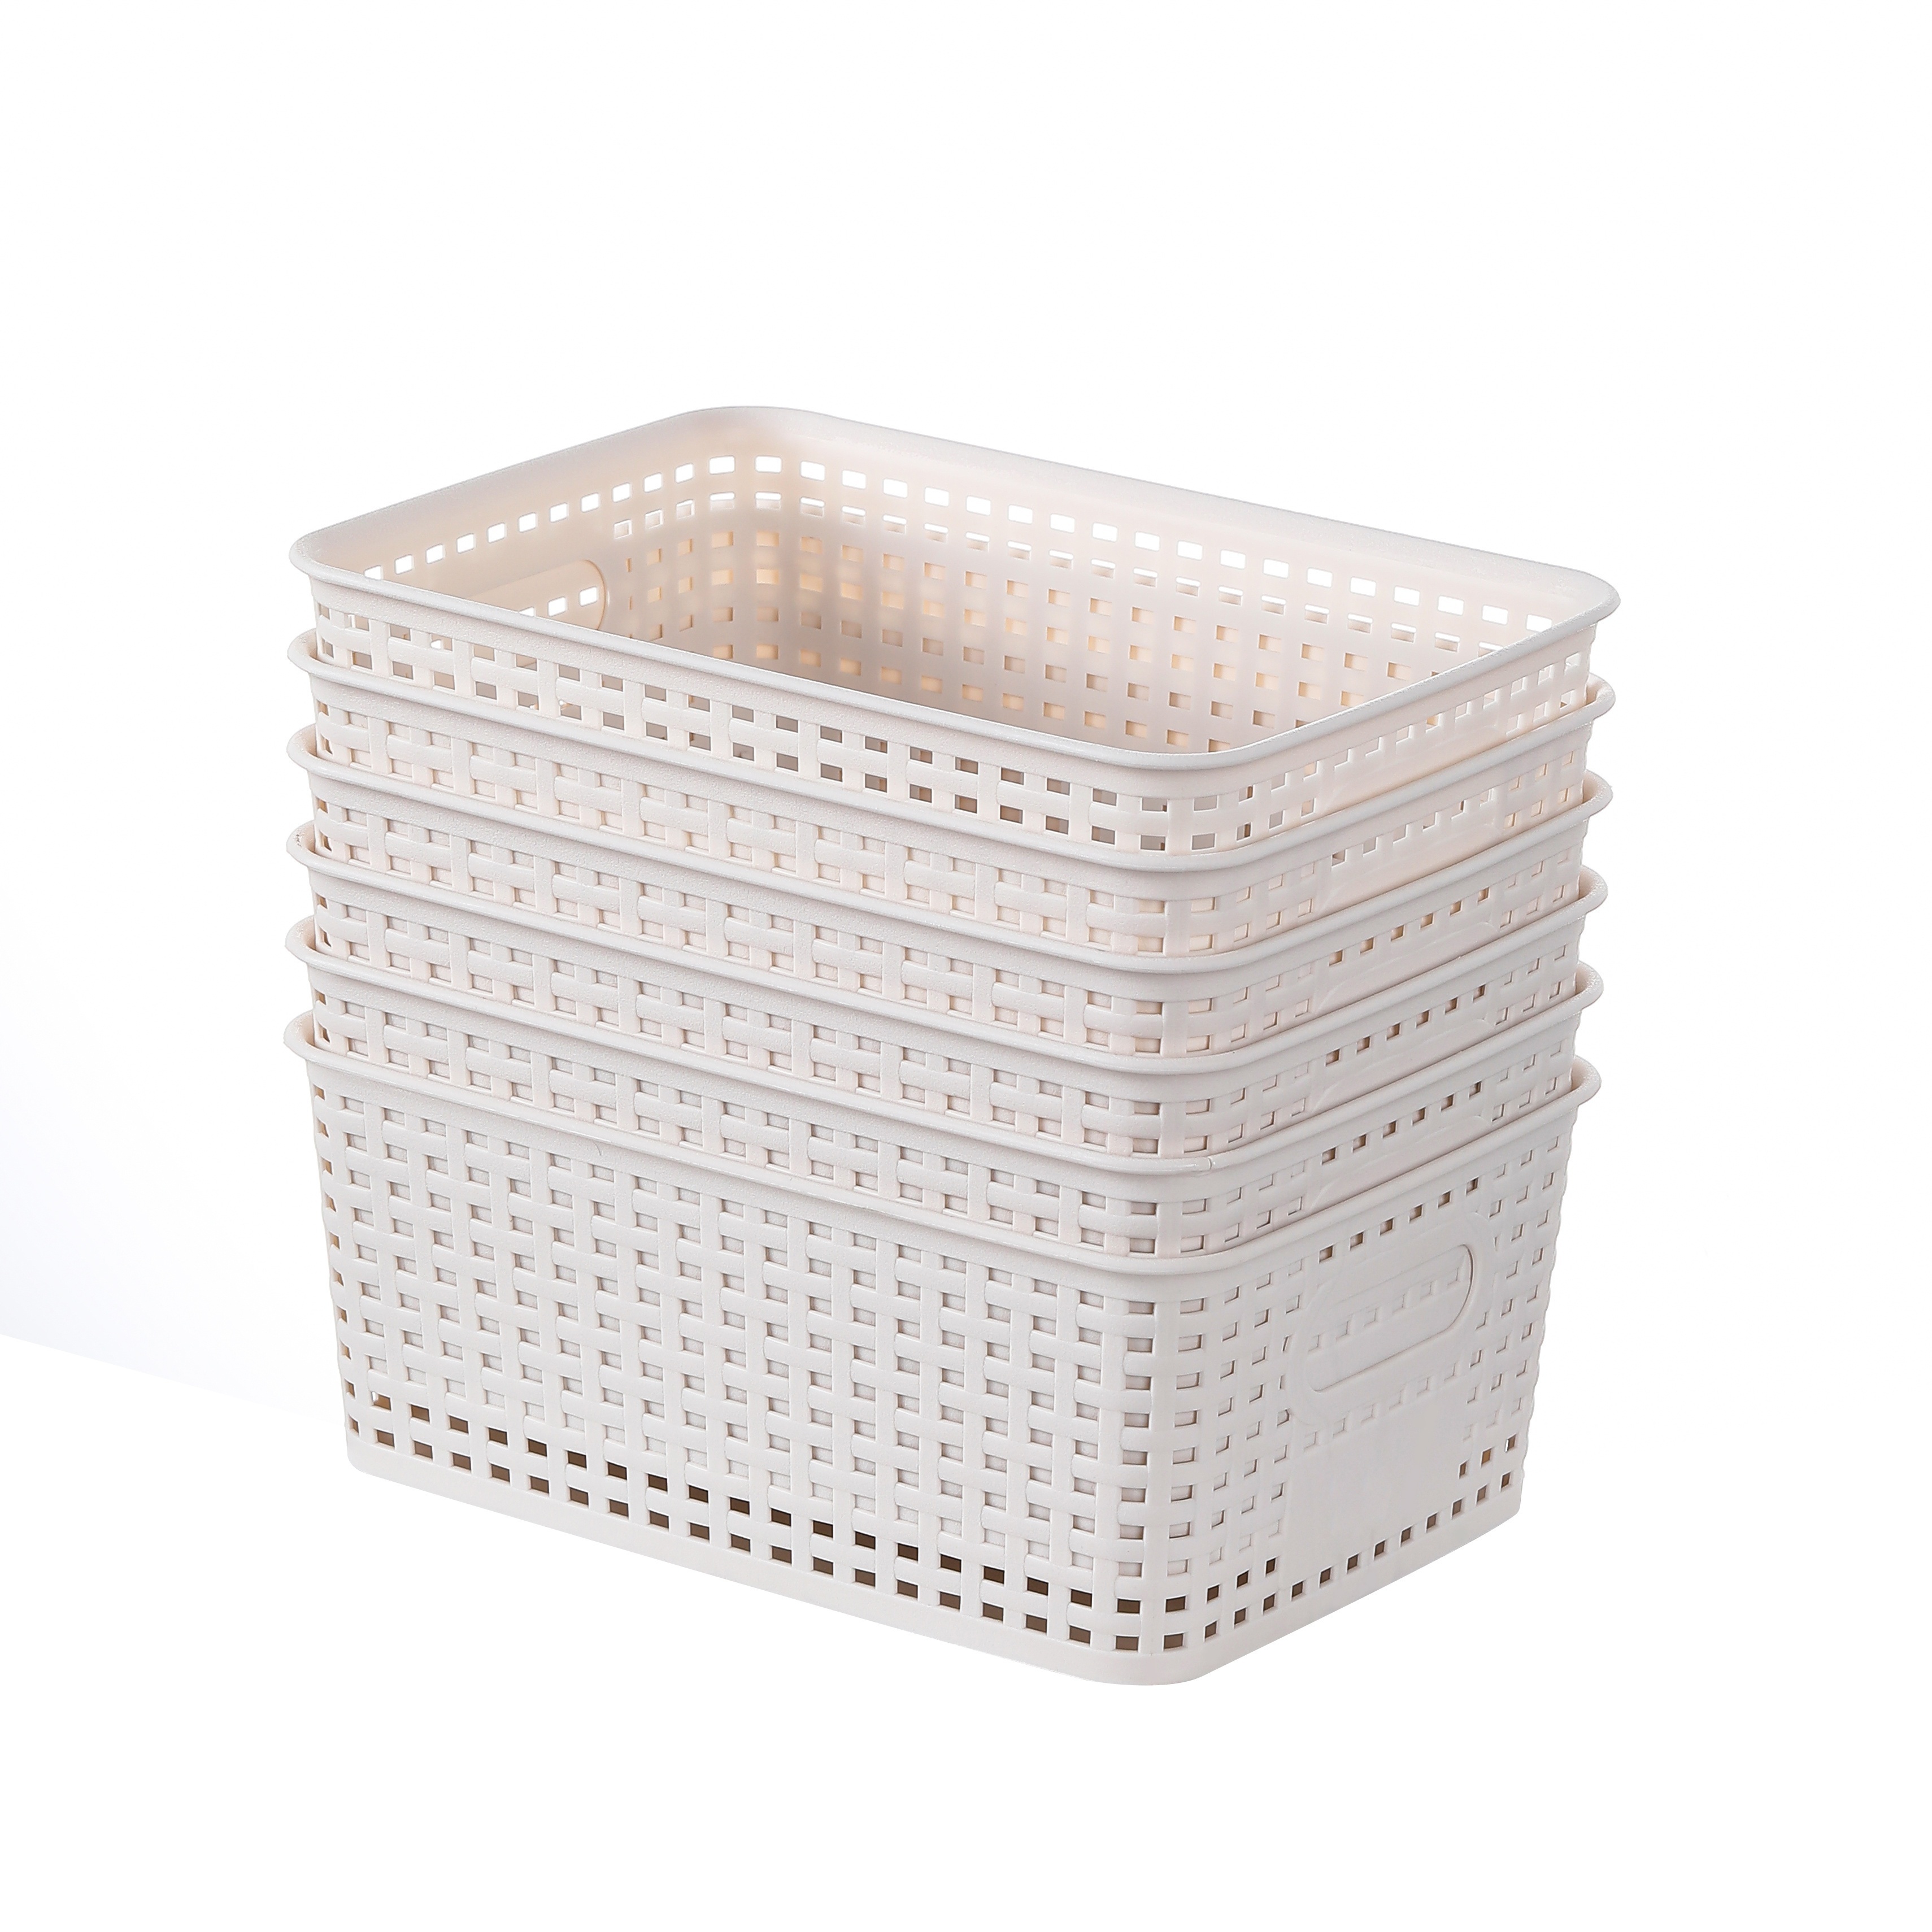 Storage Baskets For Organizing - 4 Small Storage Bins With Lids